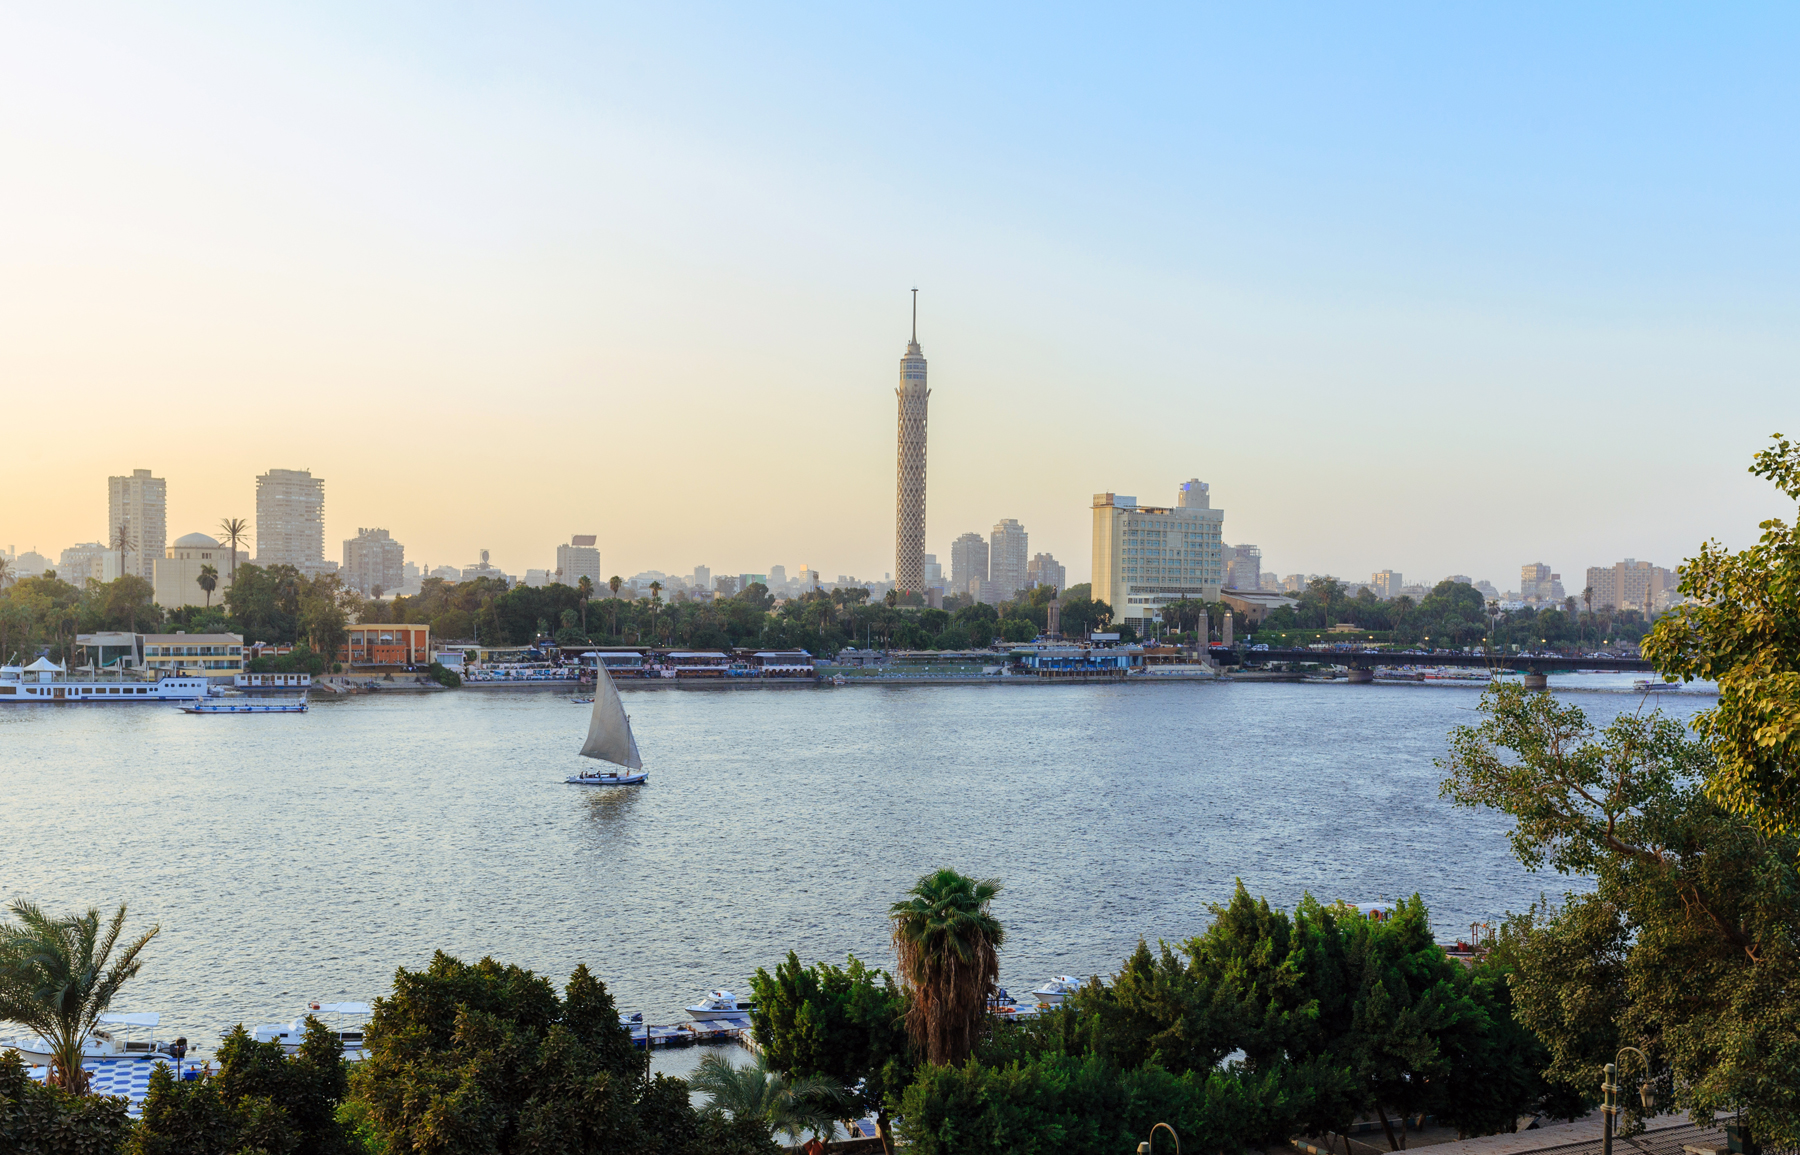 River cruises return to the Nile